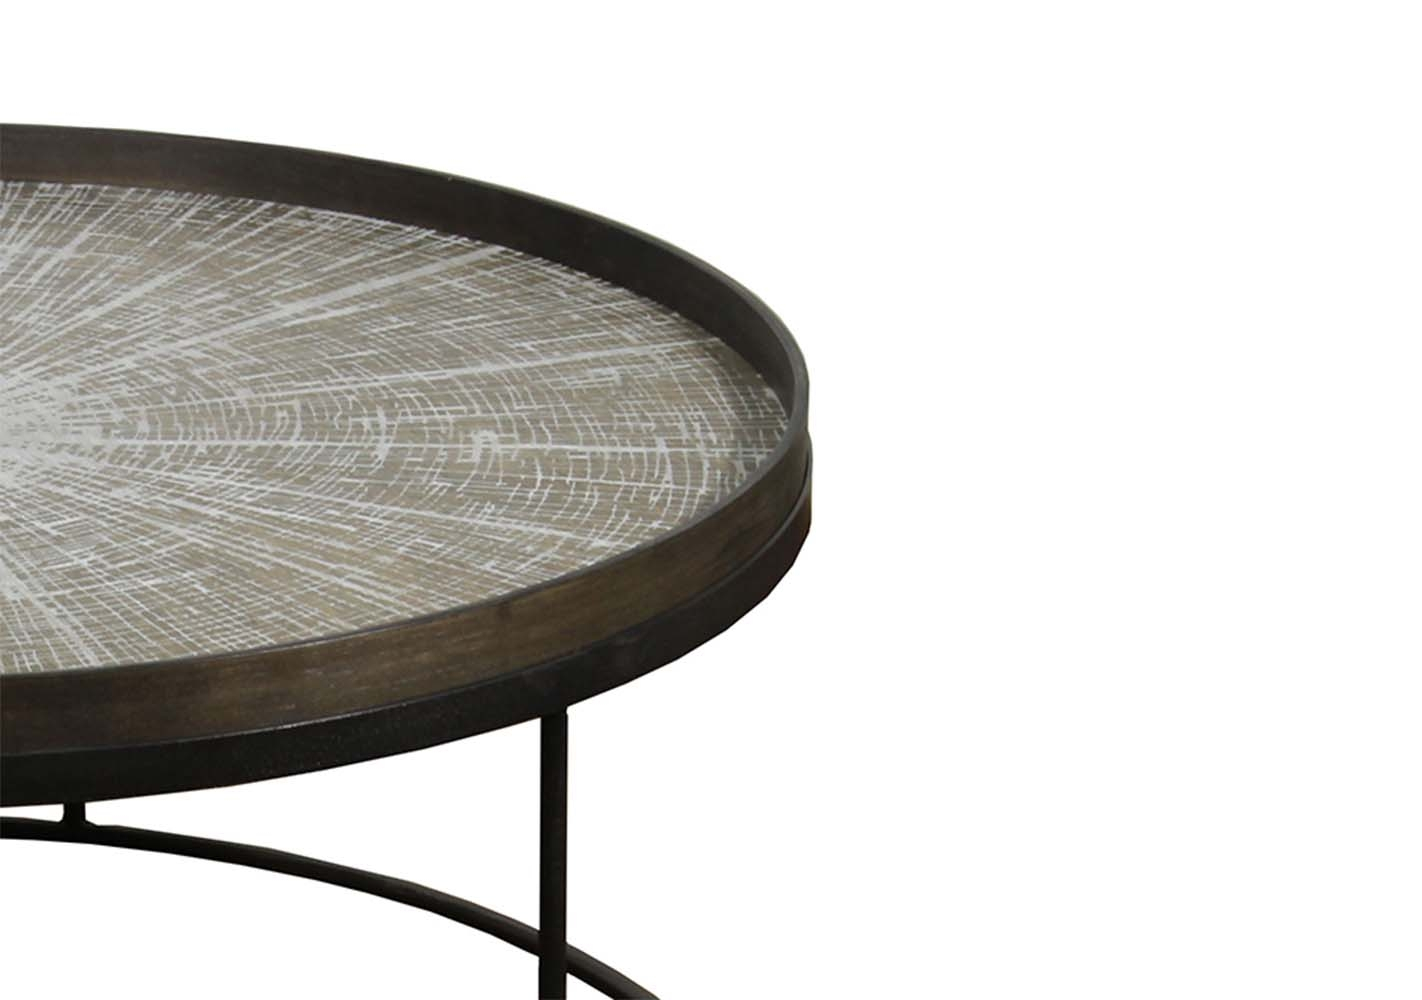 Table basse Round Tray design ethnicraft